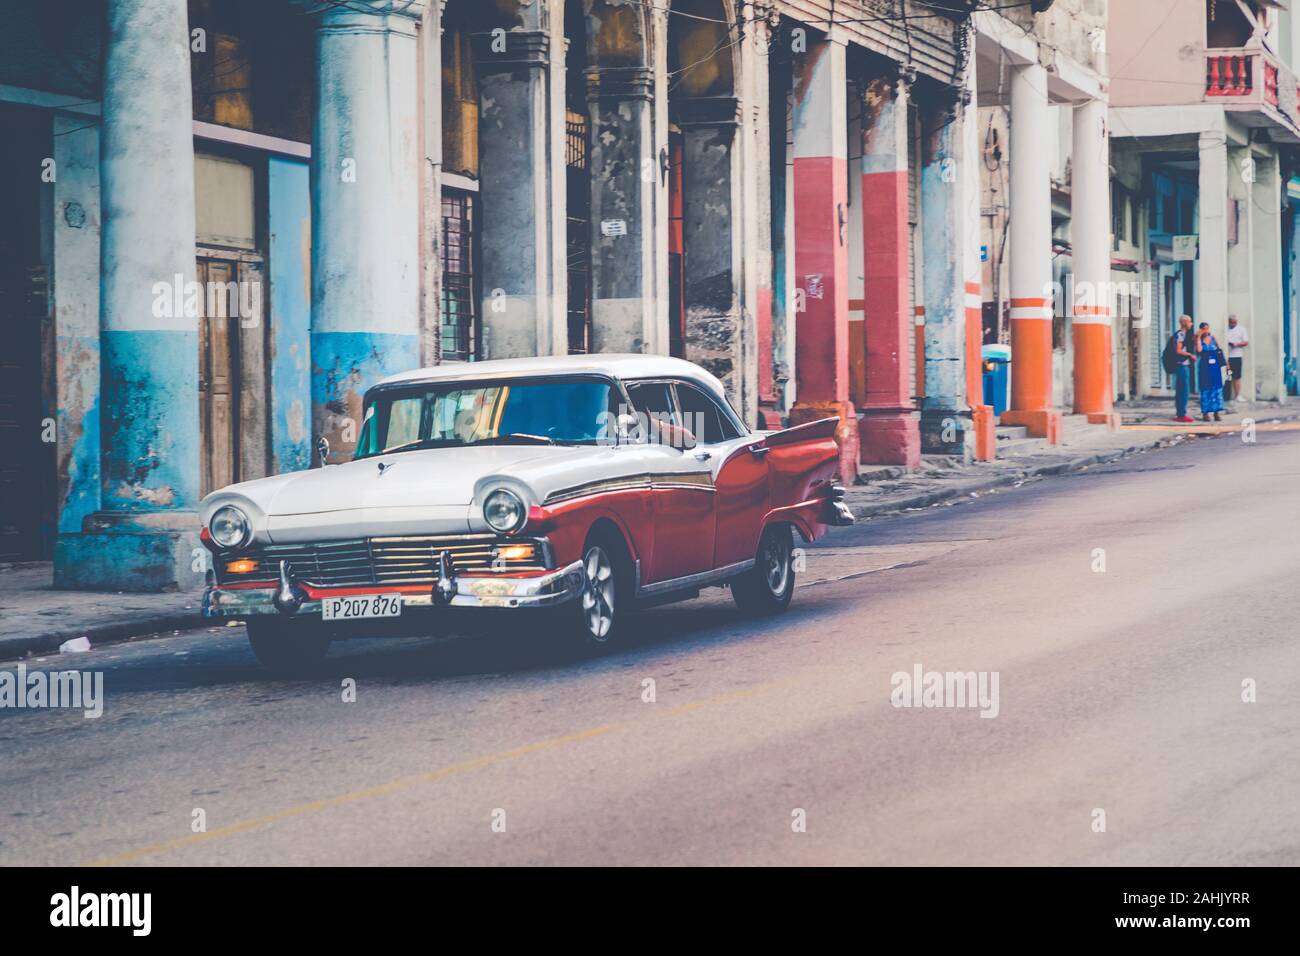 HAVANA, CUBA - DECEMBER 10, 2019: Vintage colored classic american cars in Old Havana, Cuba. Stock Photo